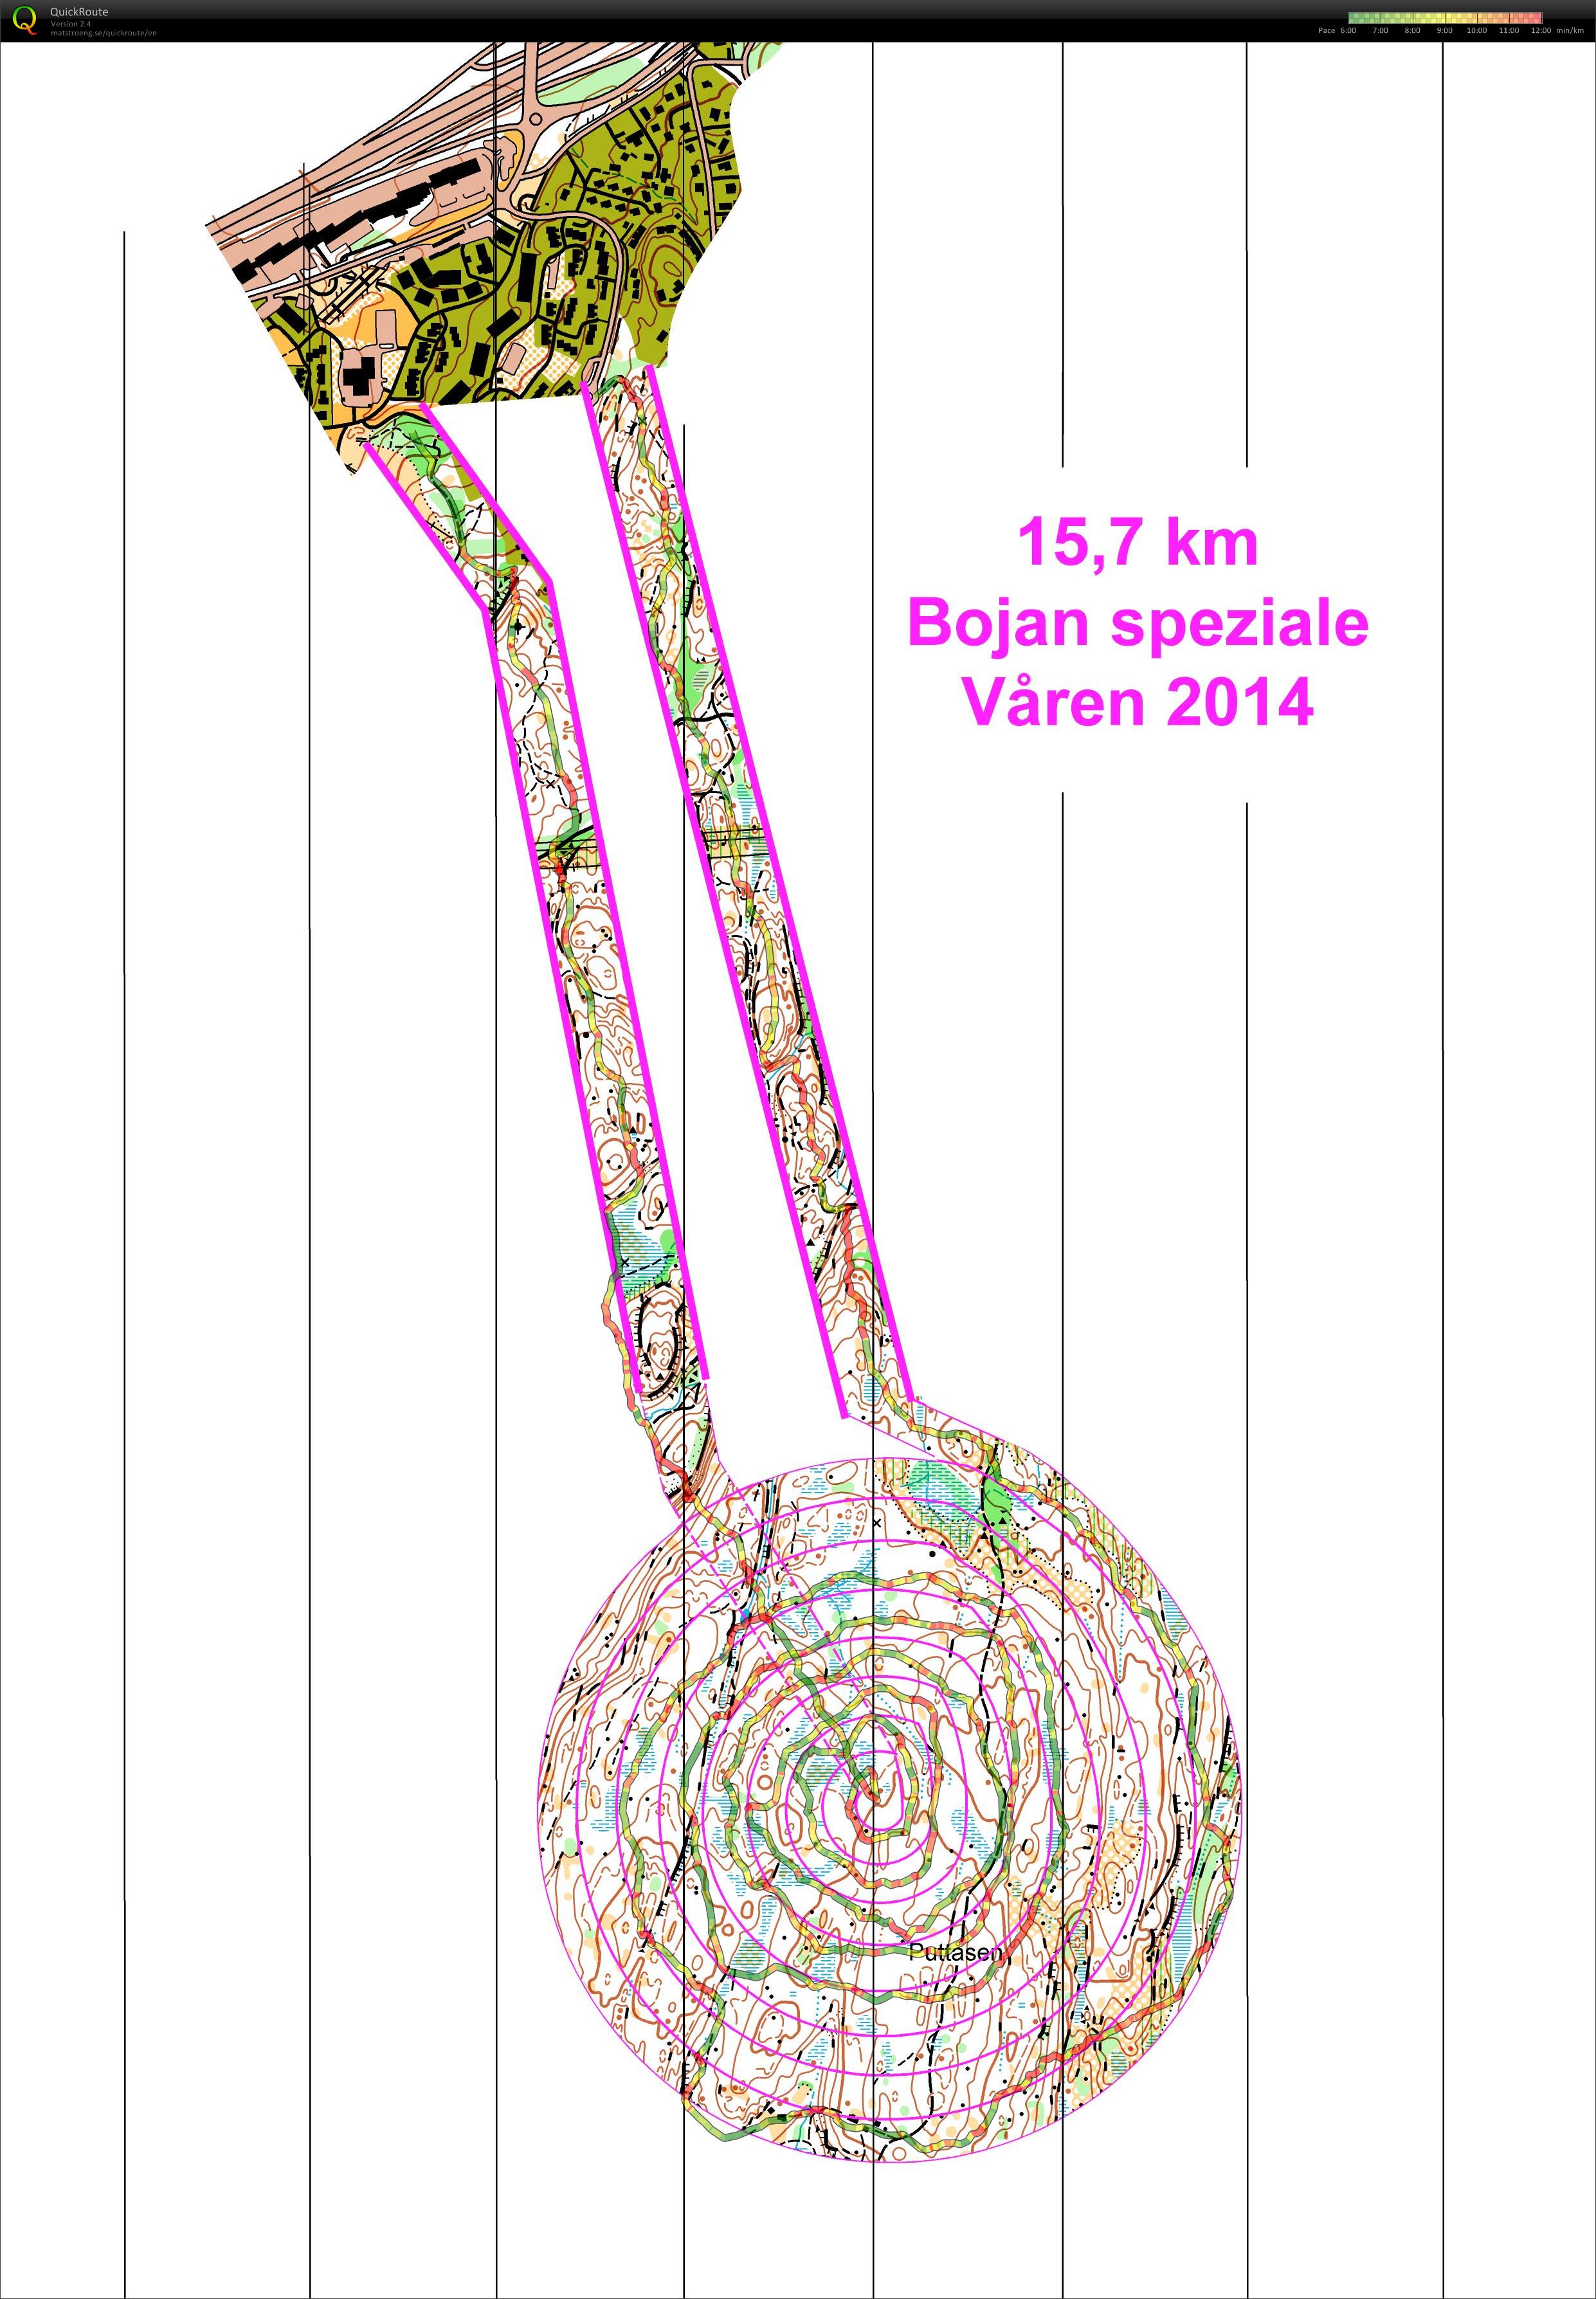 Bojan speziale (2014-04-01)